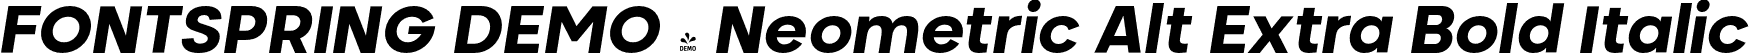 FONTSPRING DEMO - Neometric Alt Extra Bold Italic font - Fontspring-DEMO-neometricalt-extrabolditalic.otf